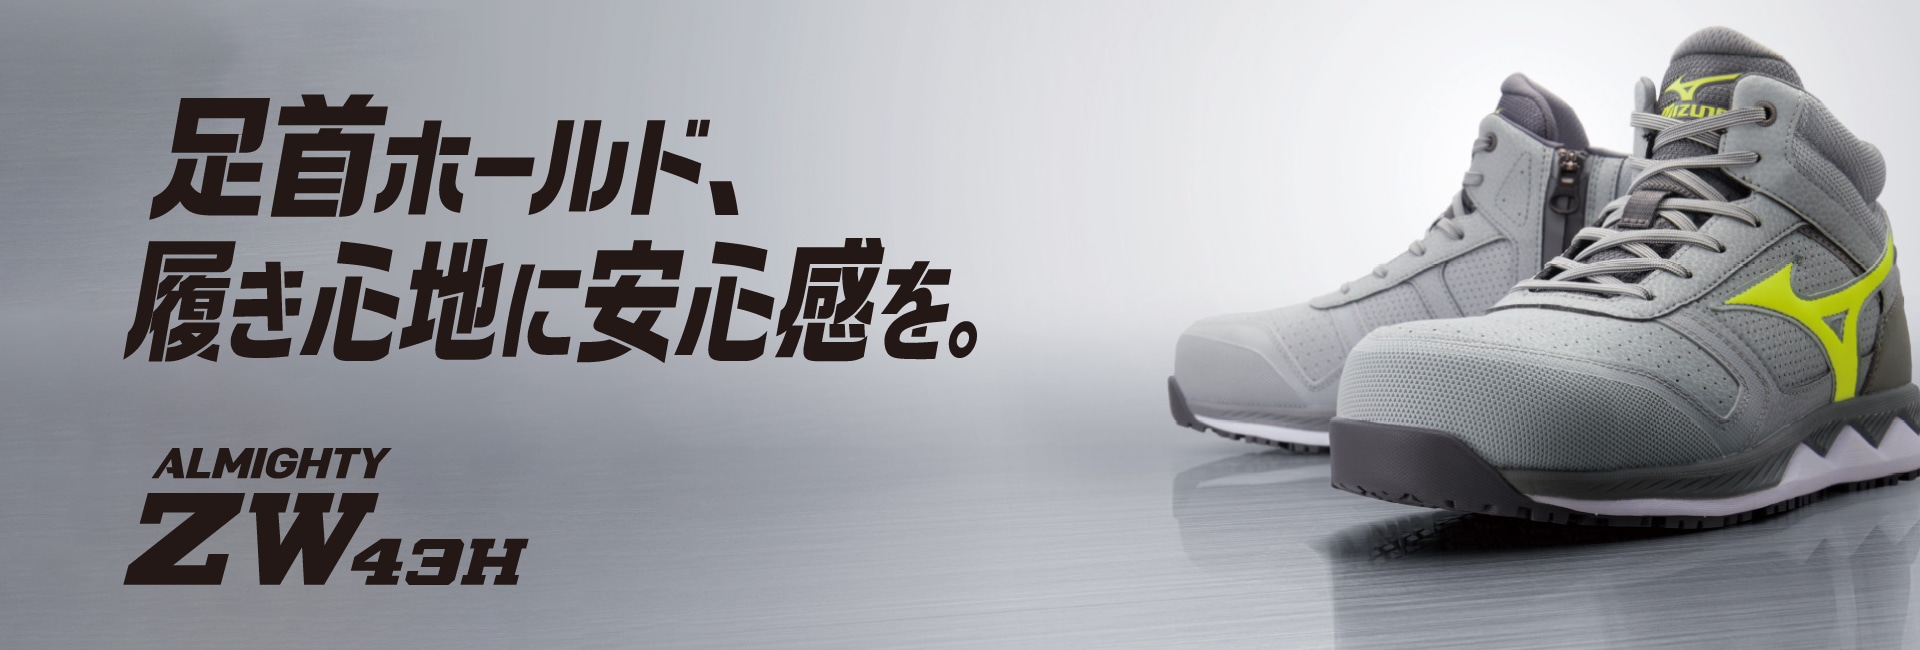 MIZUNO オールマイティ ZW43H F1GA200336 - スニーカー